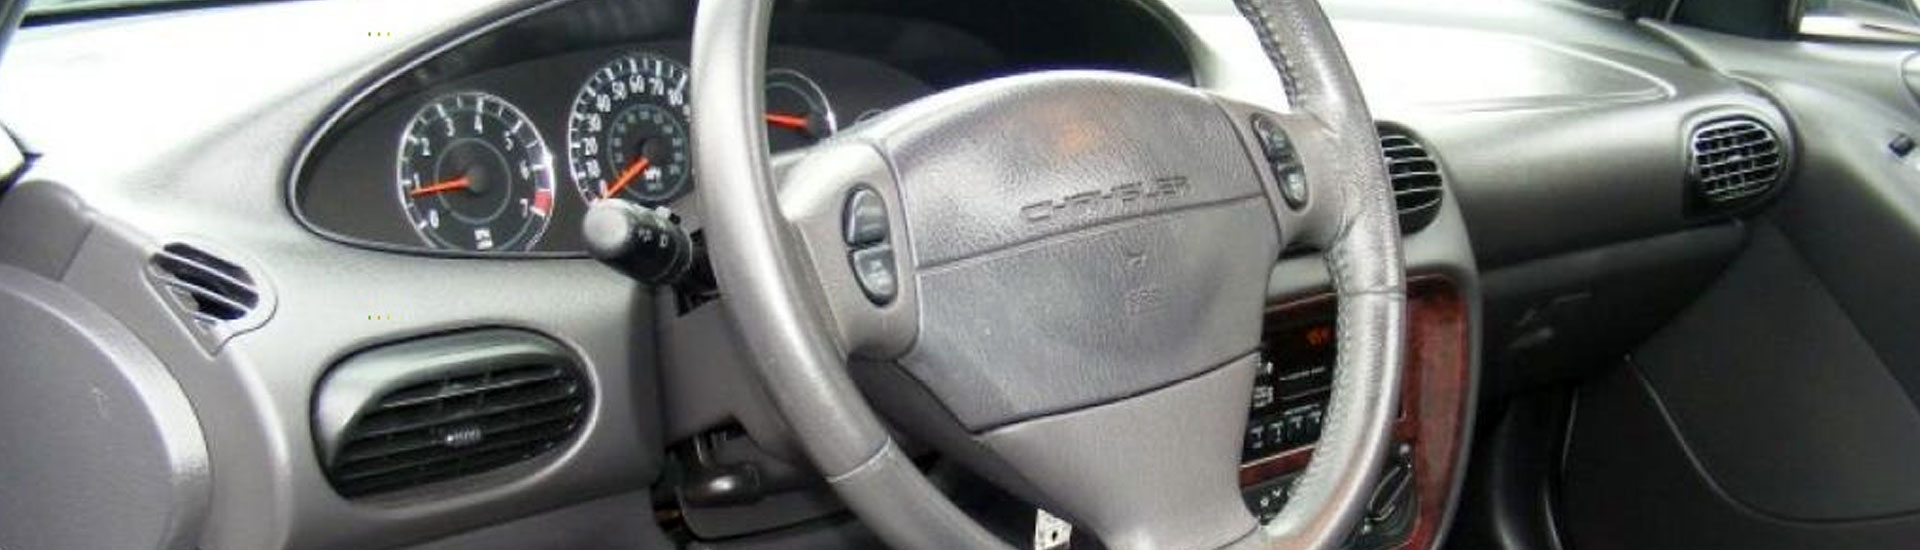 Chrysler Cirrus Dash Trim Kits